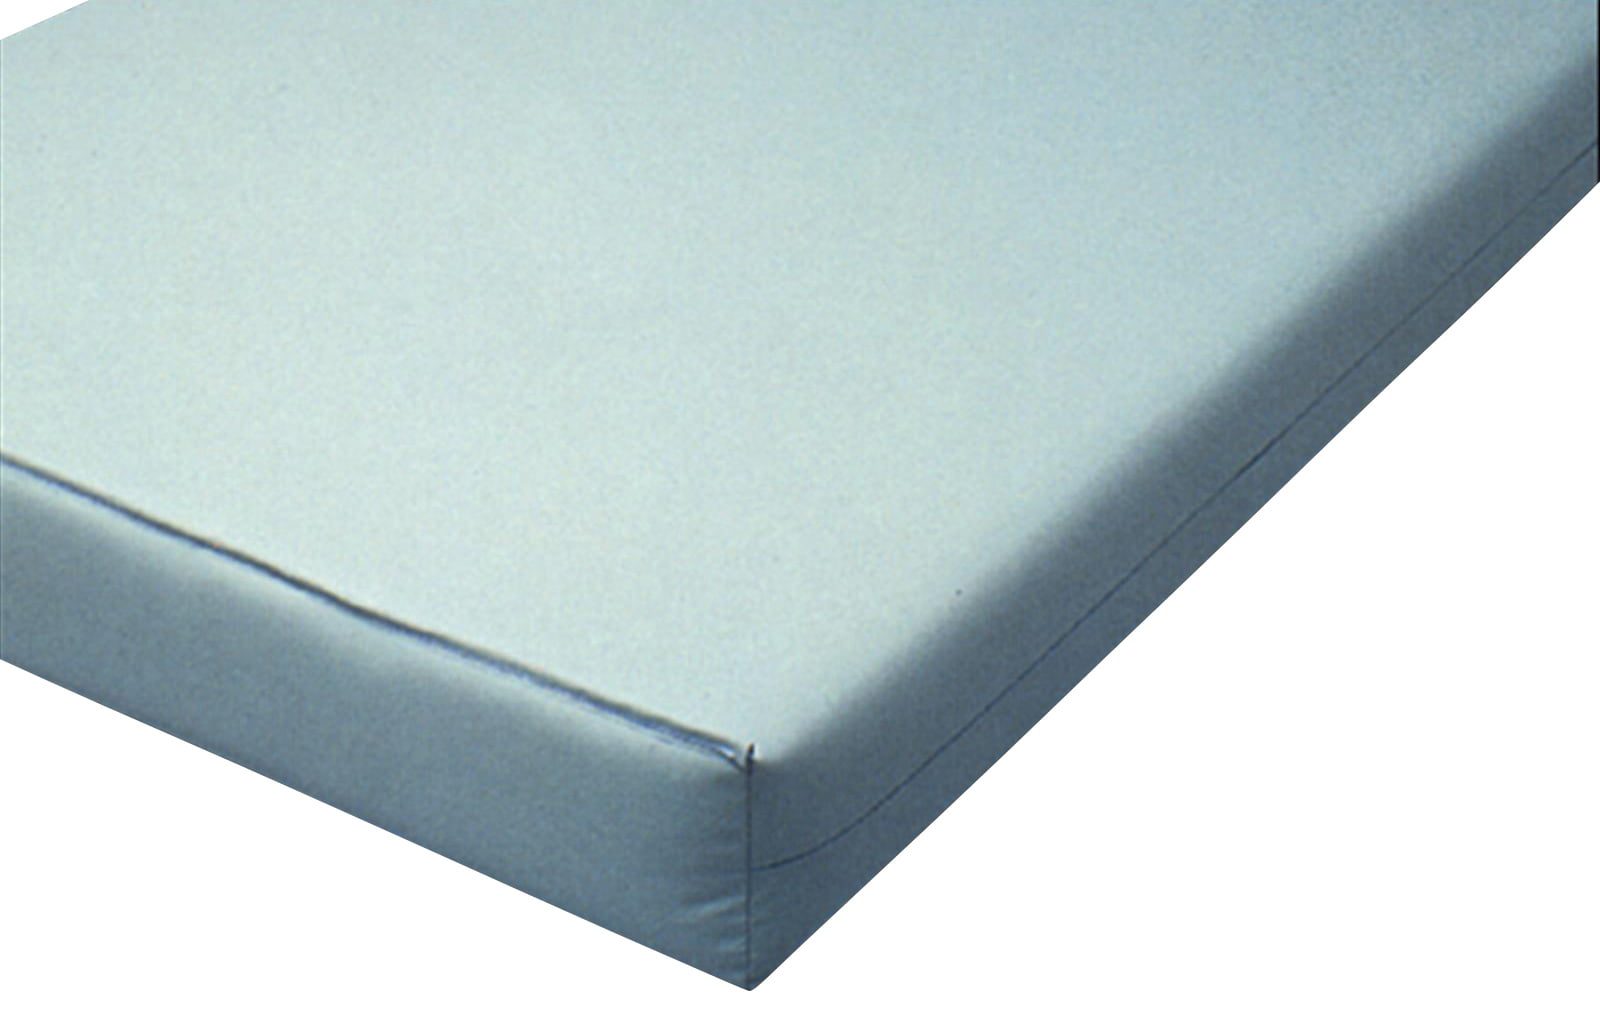 tightly fitting mattress pad